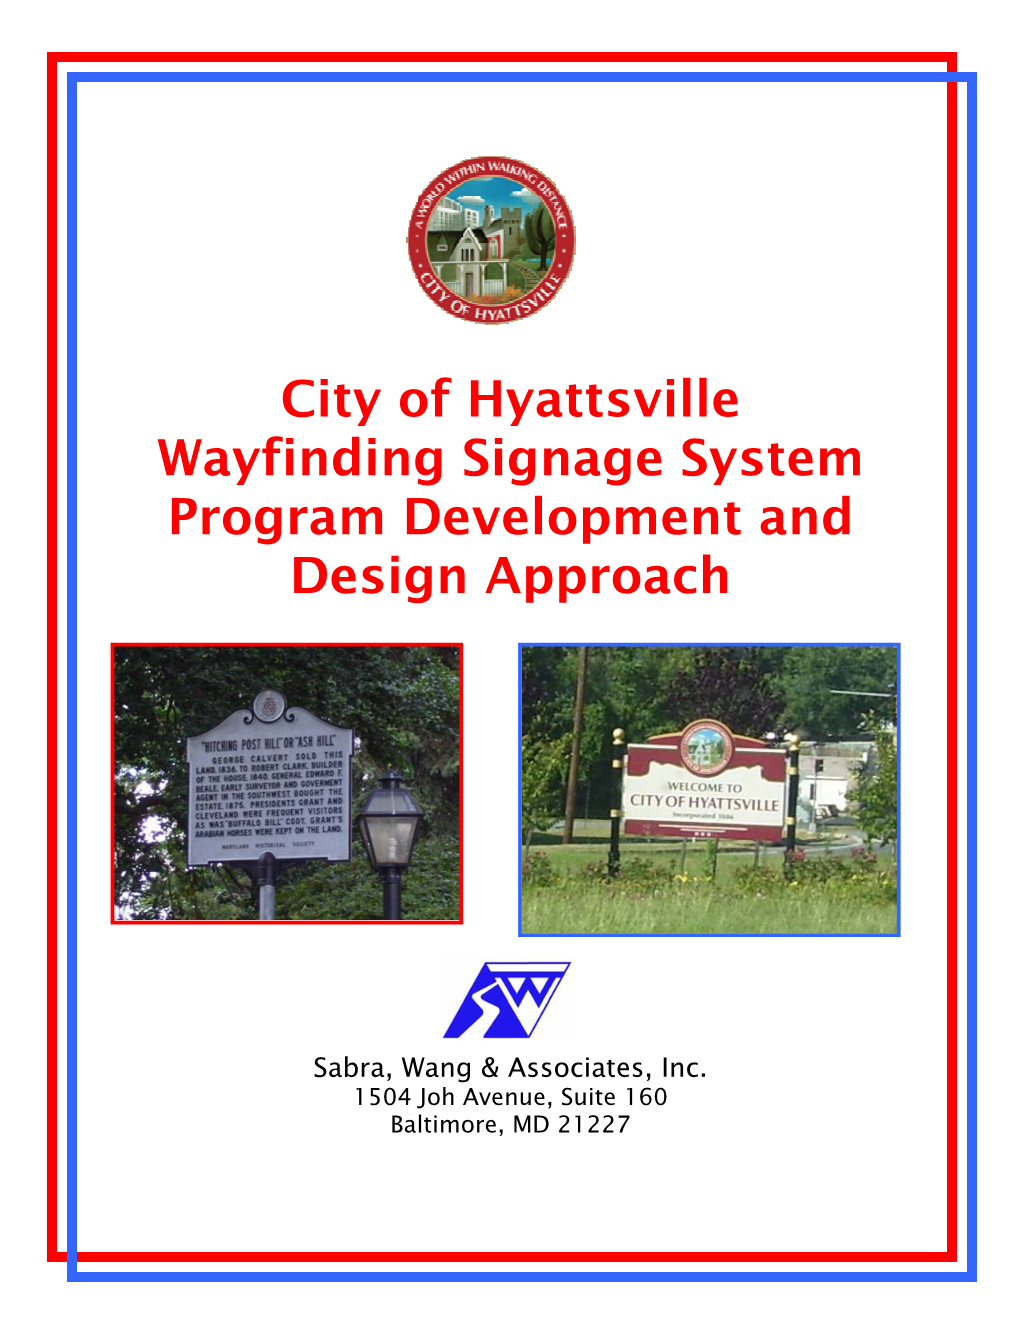 City of Hyattsville Wayfinding Signage System Program Development and Design Approach